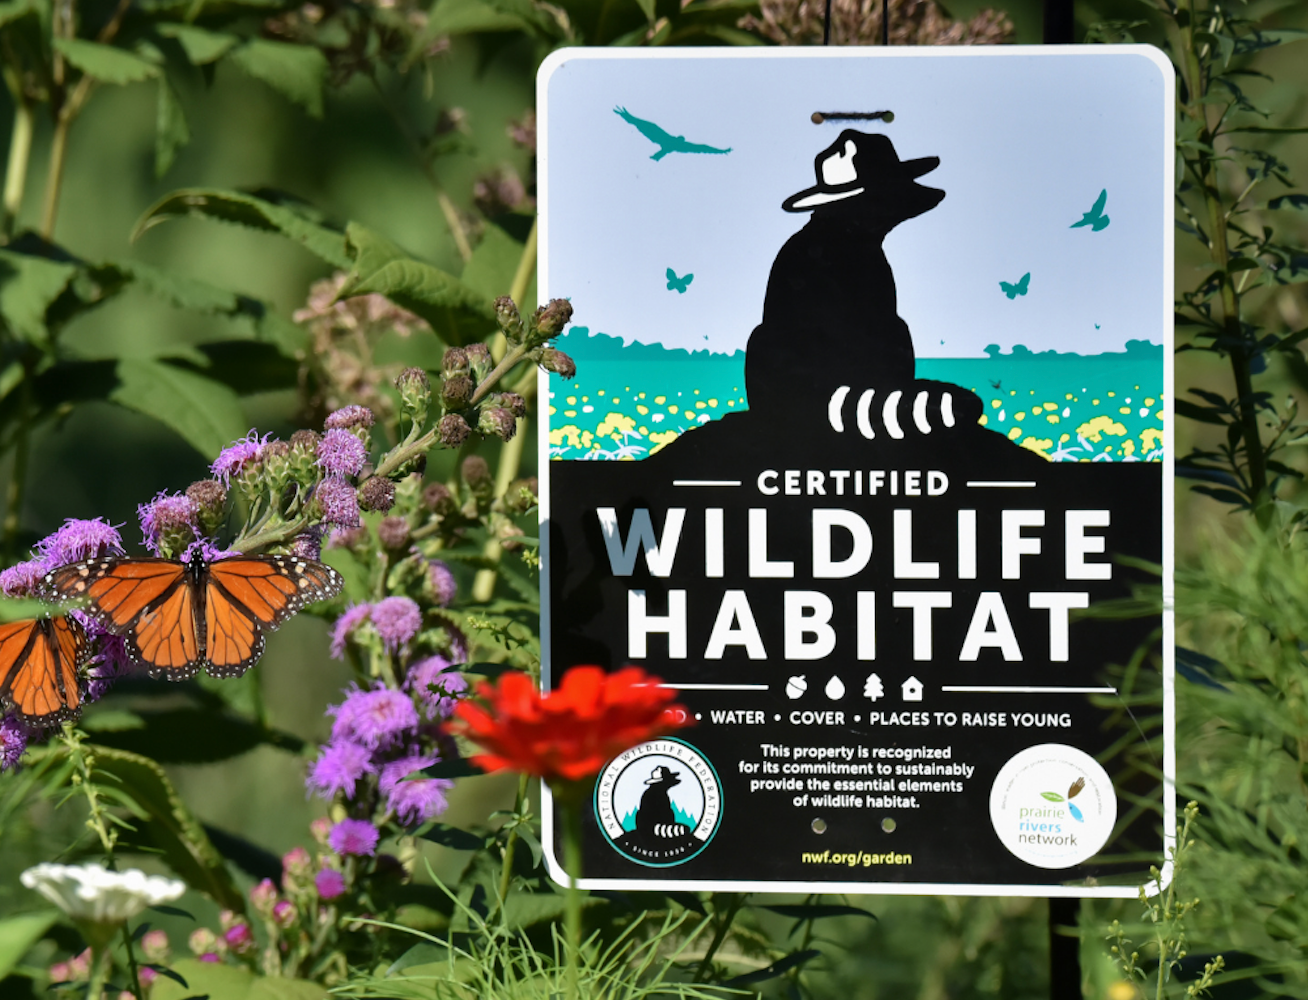 National Wildlife Federation Certified Wildlife Habitat sign in native plant garden with monarch butterflies